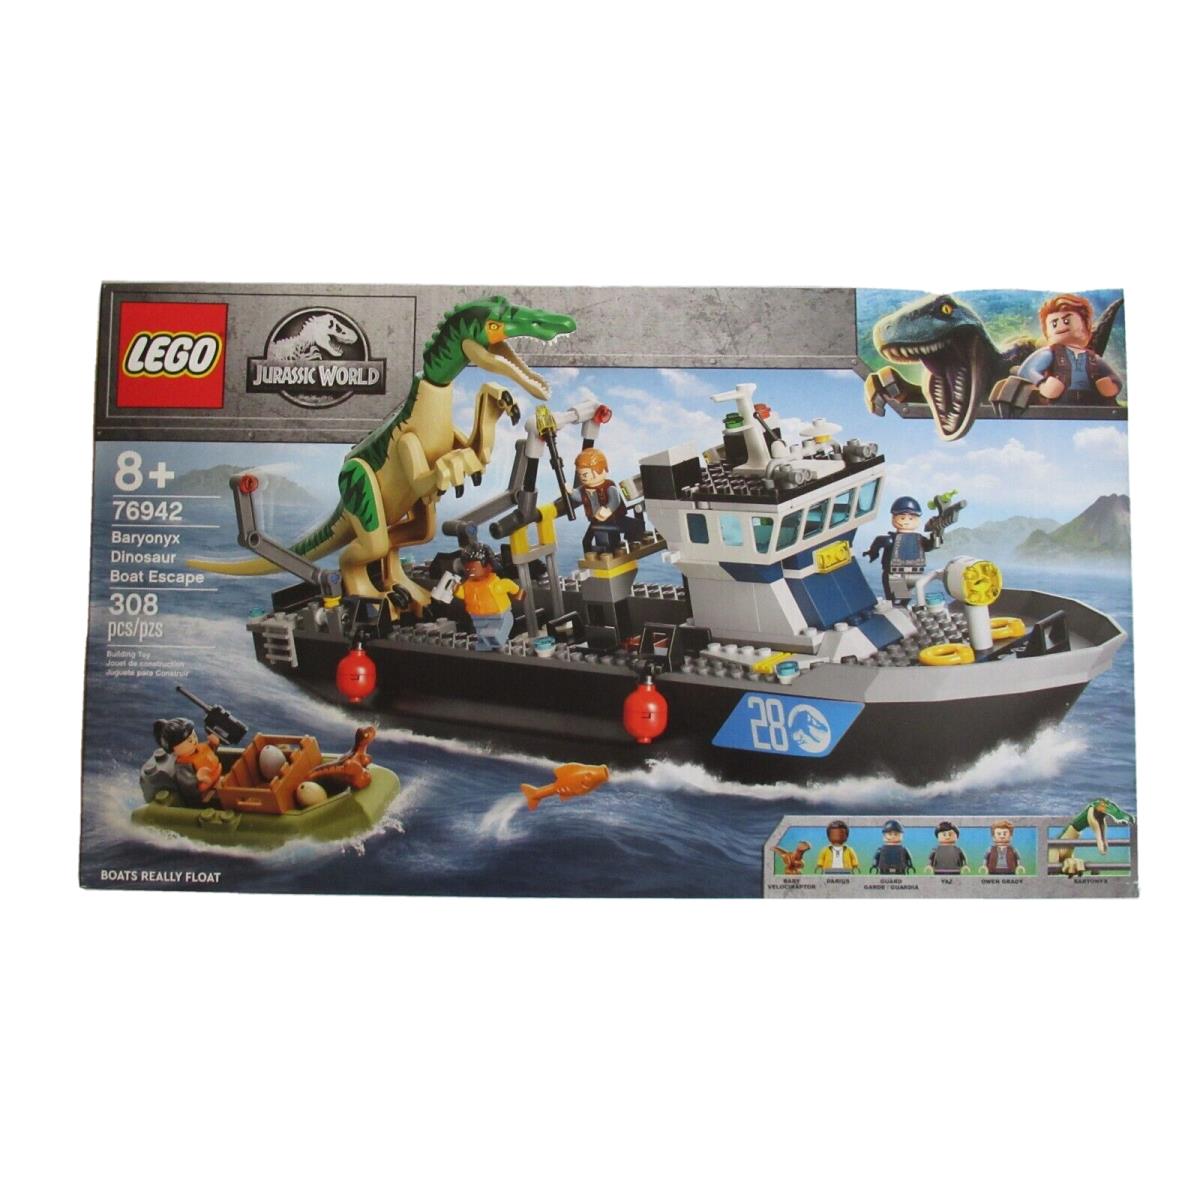 Lego Jurassic World 76942 Baryonyx Dinosaur Boat Escape-308 Pieces